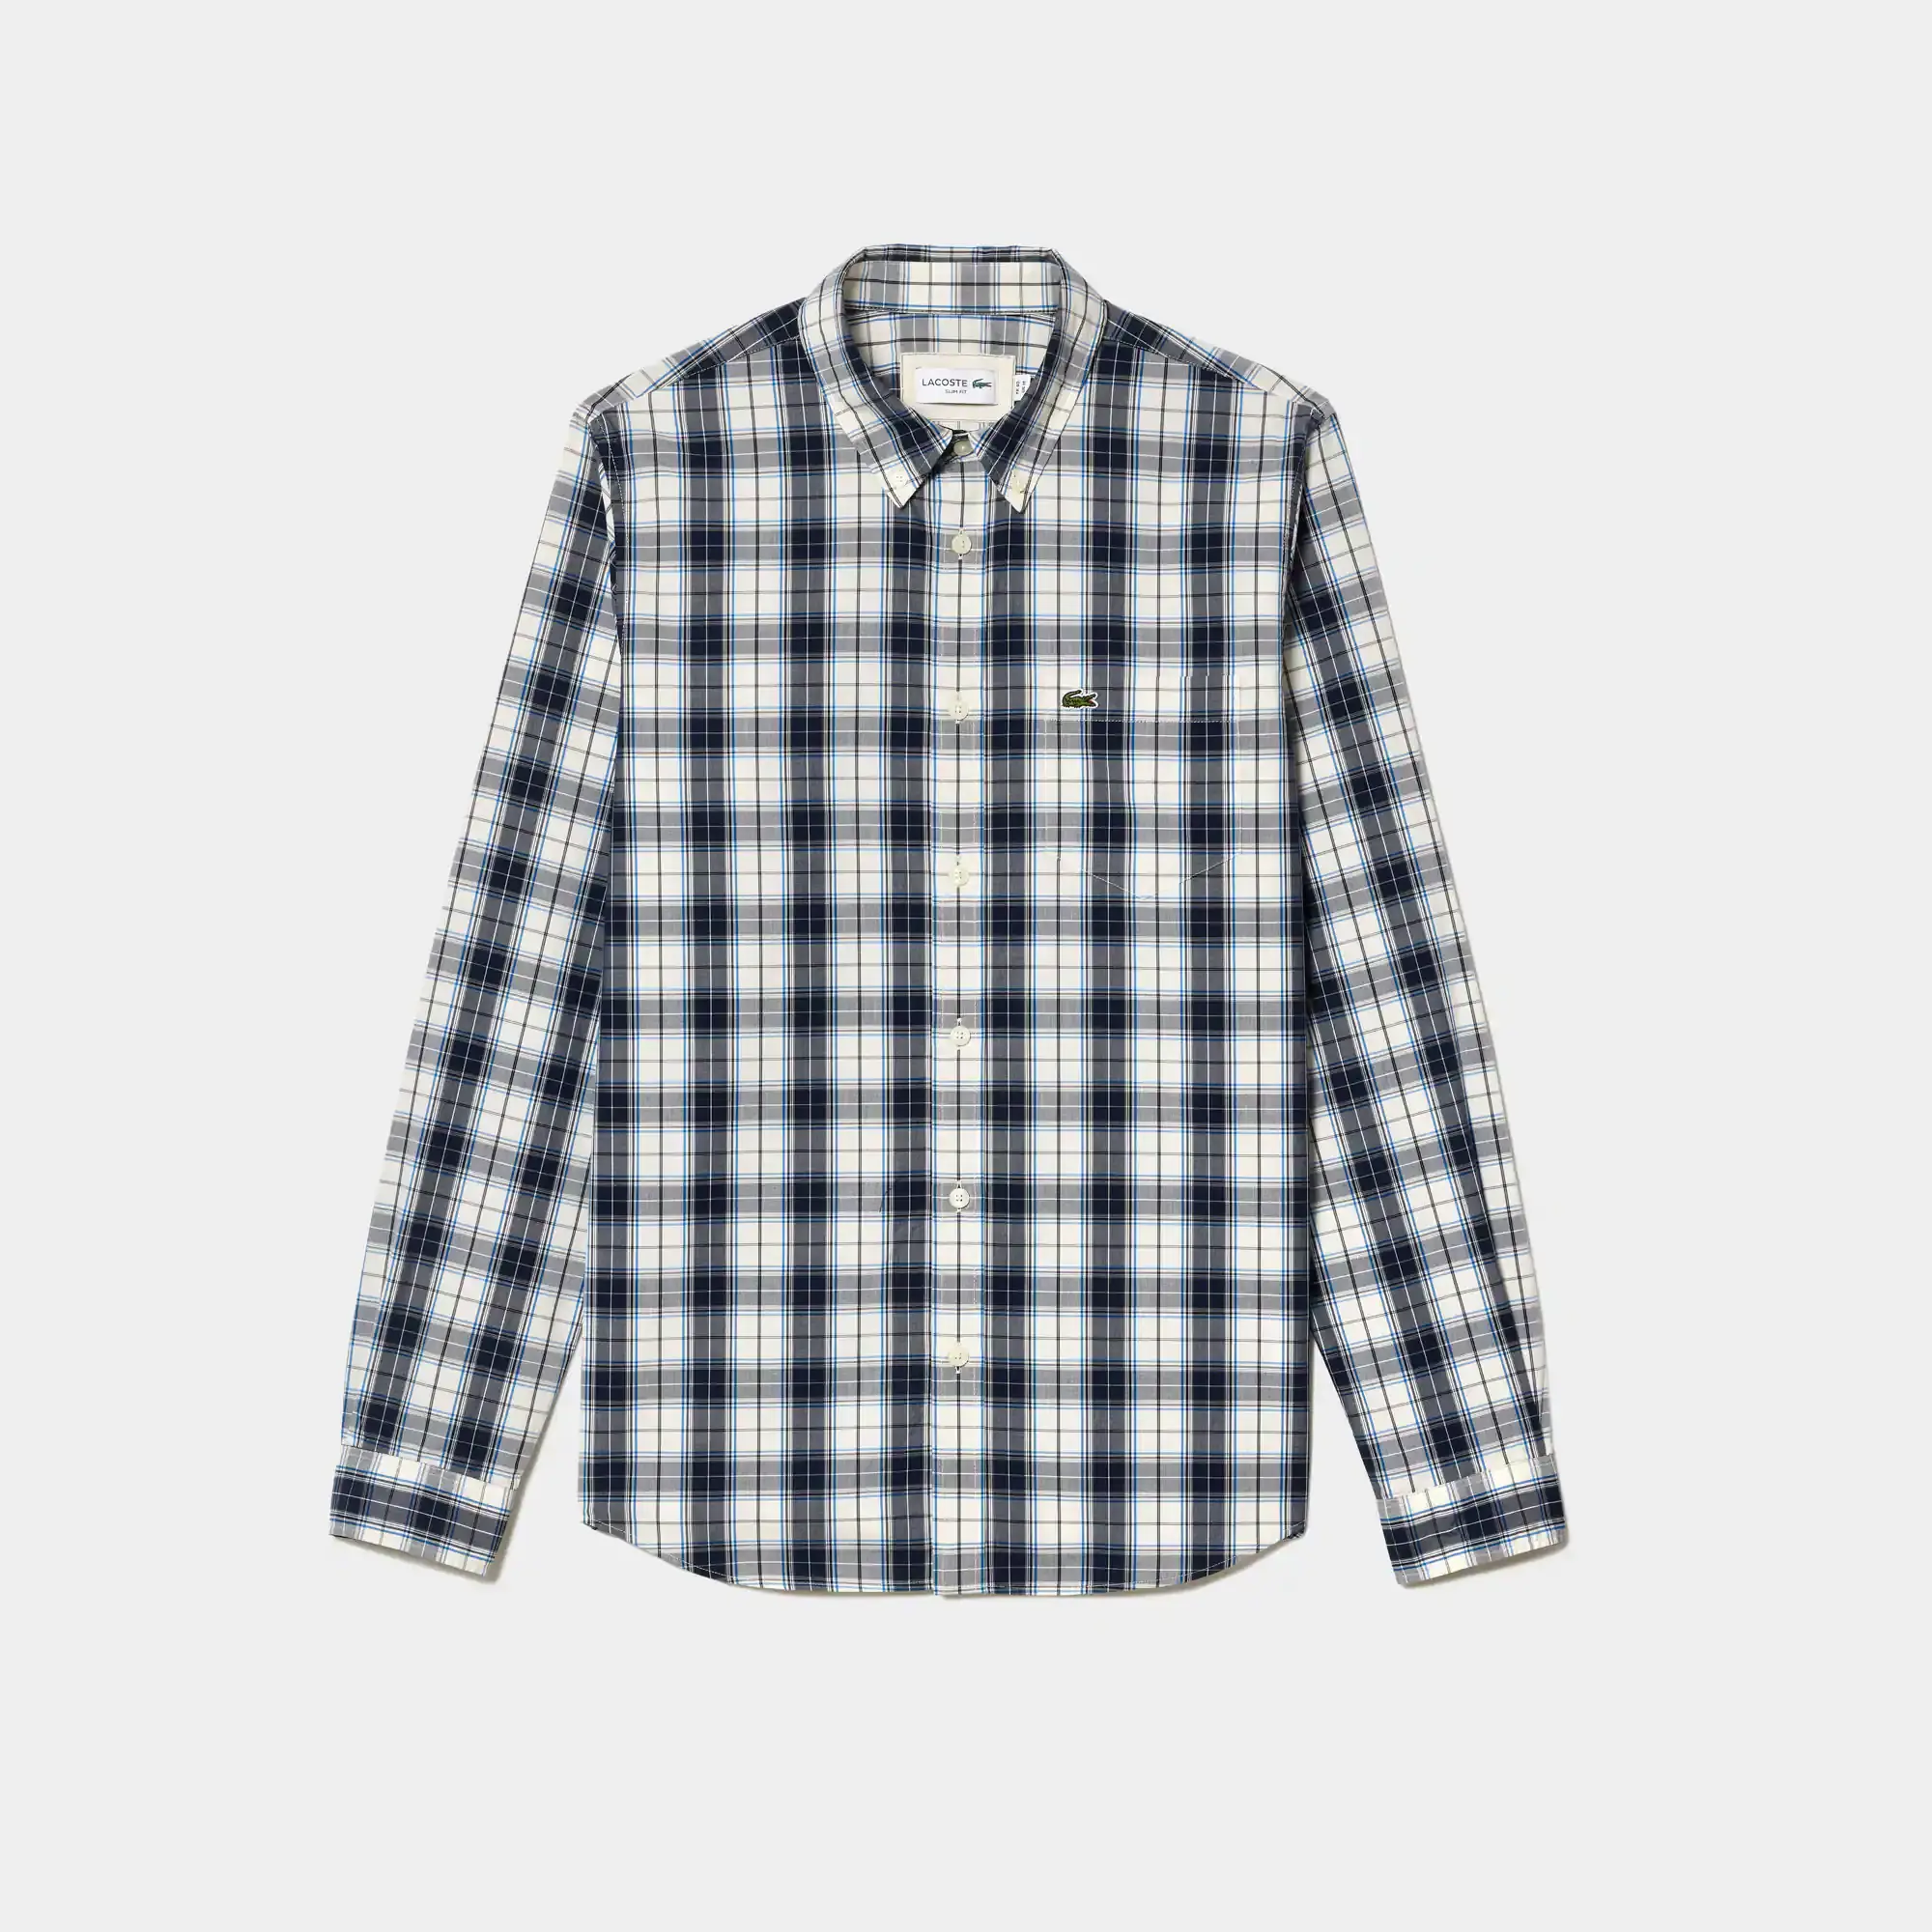 Lacoste Men's Check Print Stretch Shirt. 1